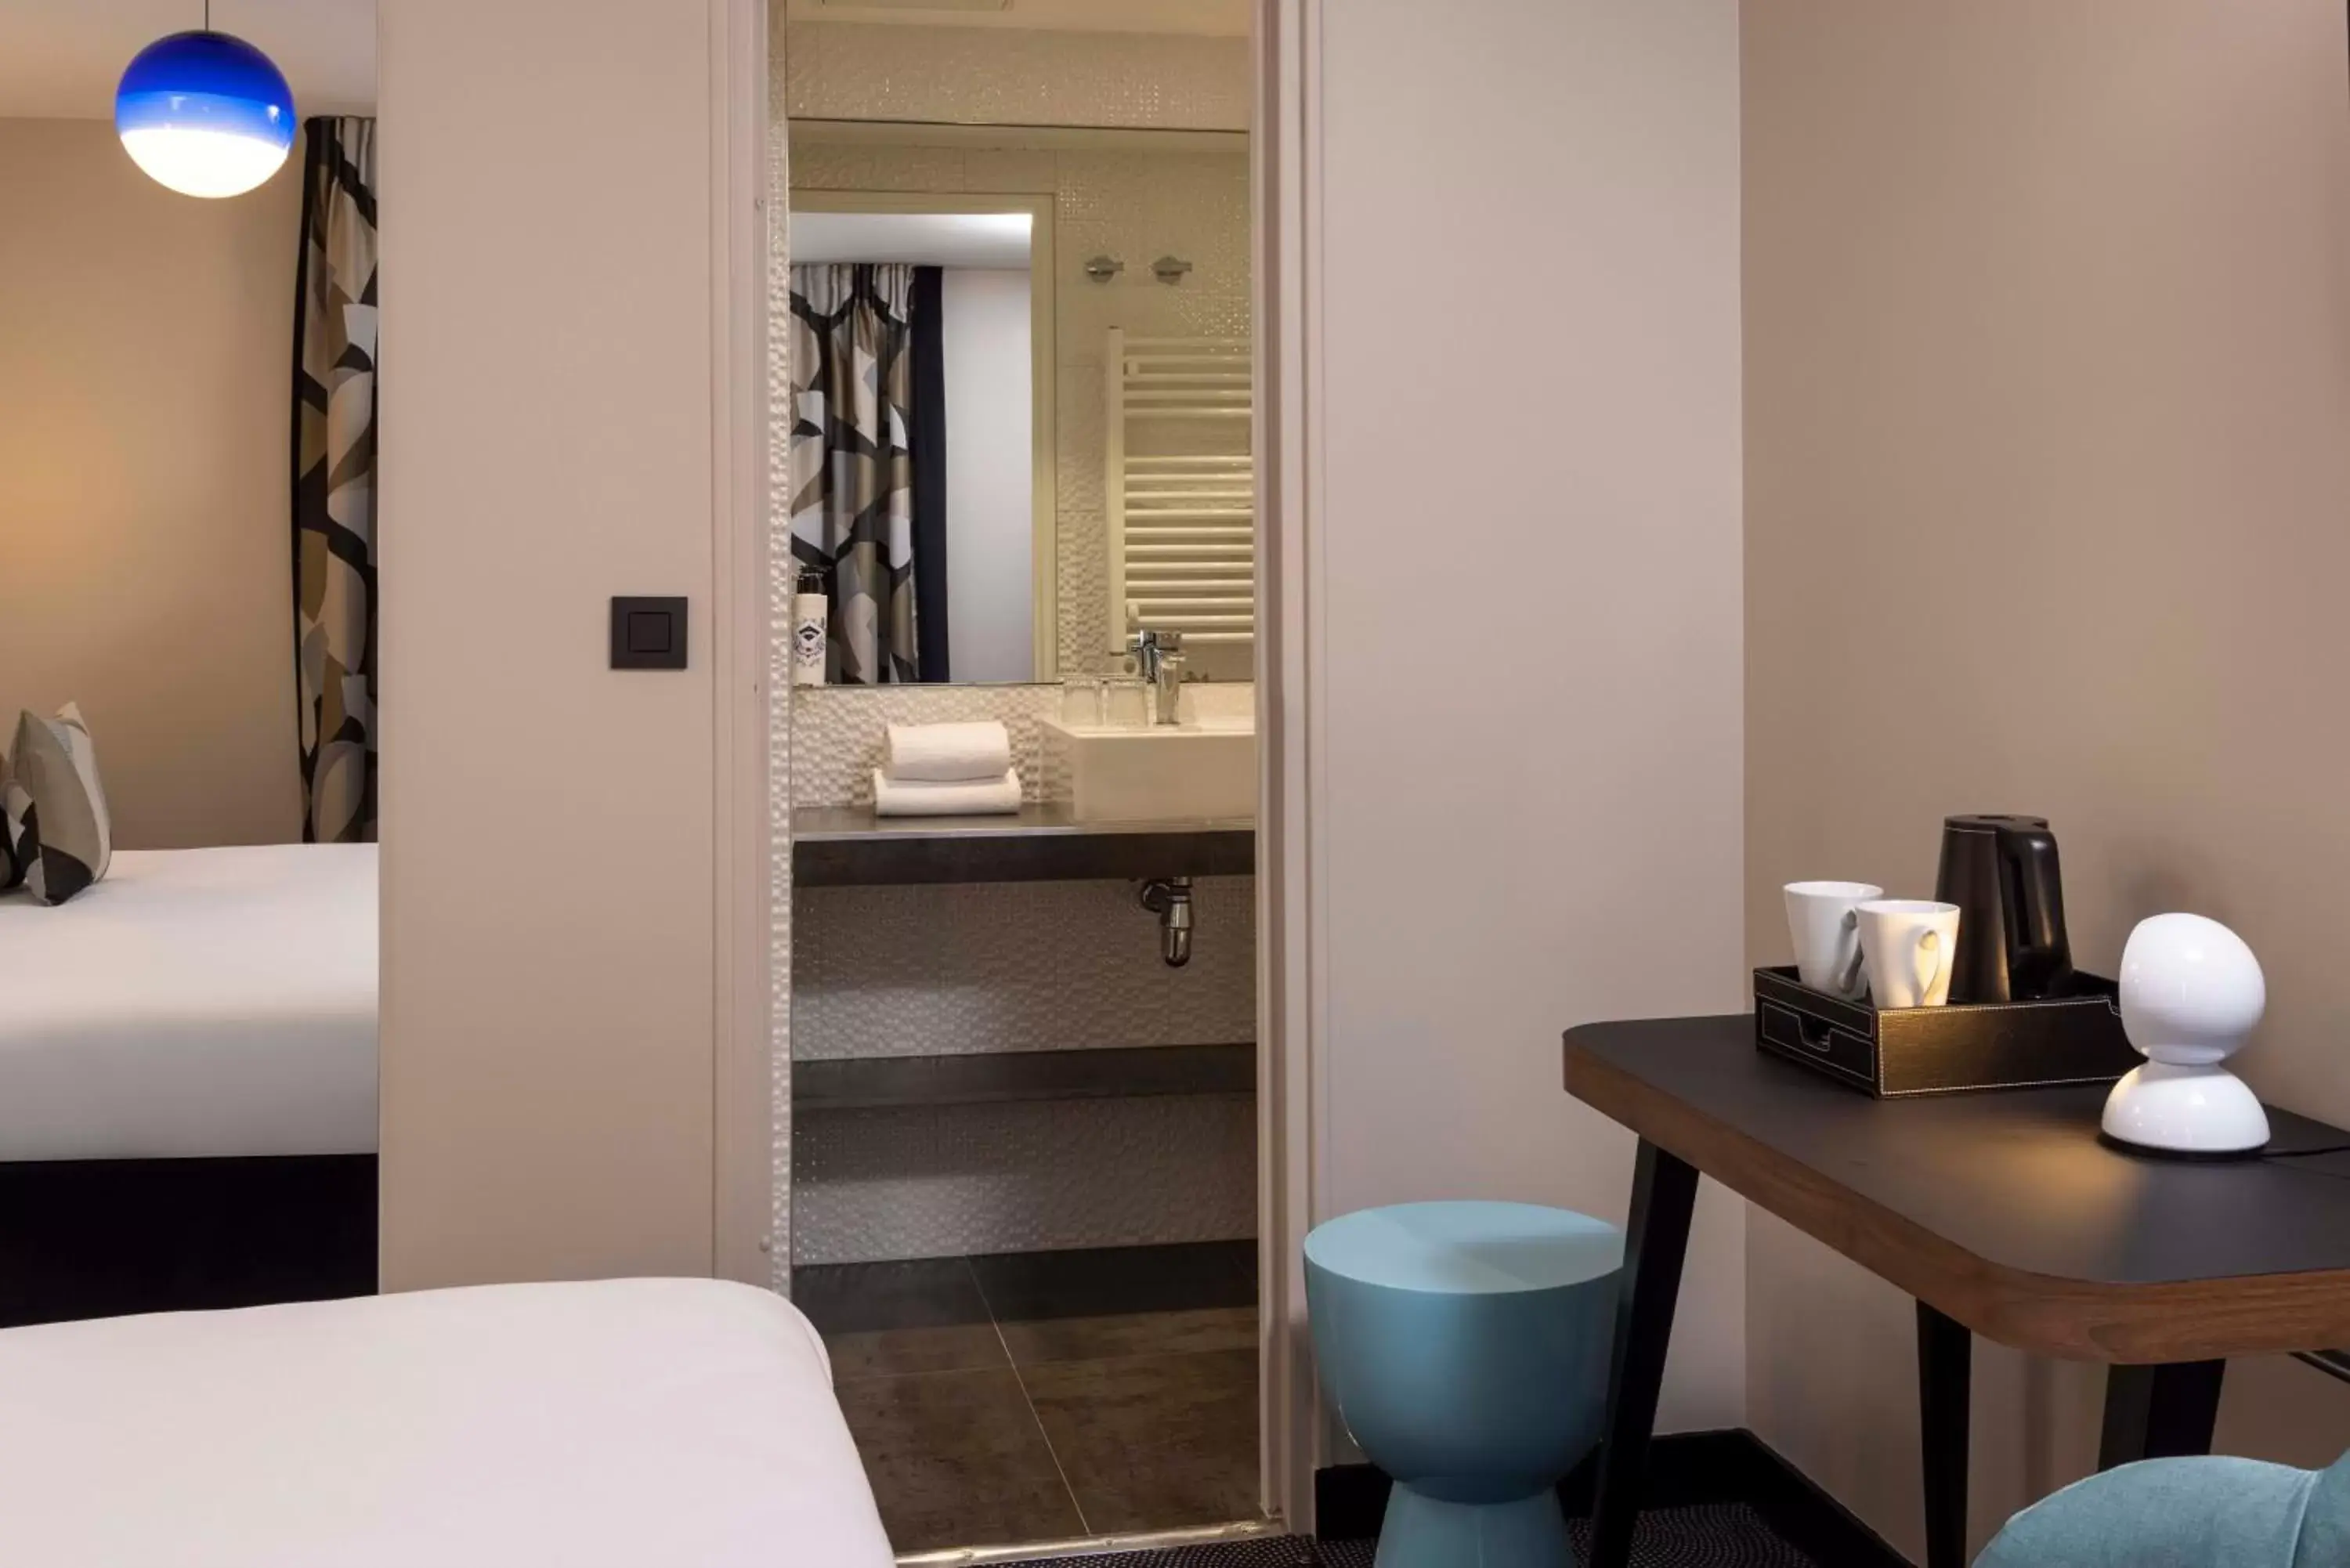 Photo of the whole room, Bathroom in Hôtel Regina Opéra Grands Boulevards